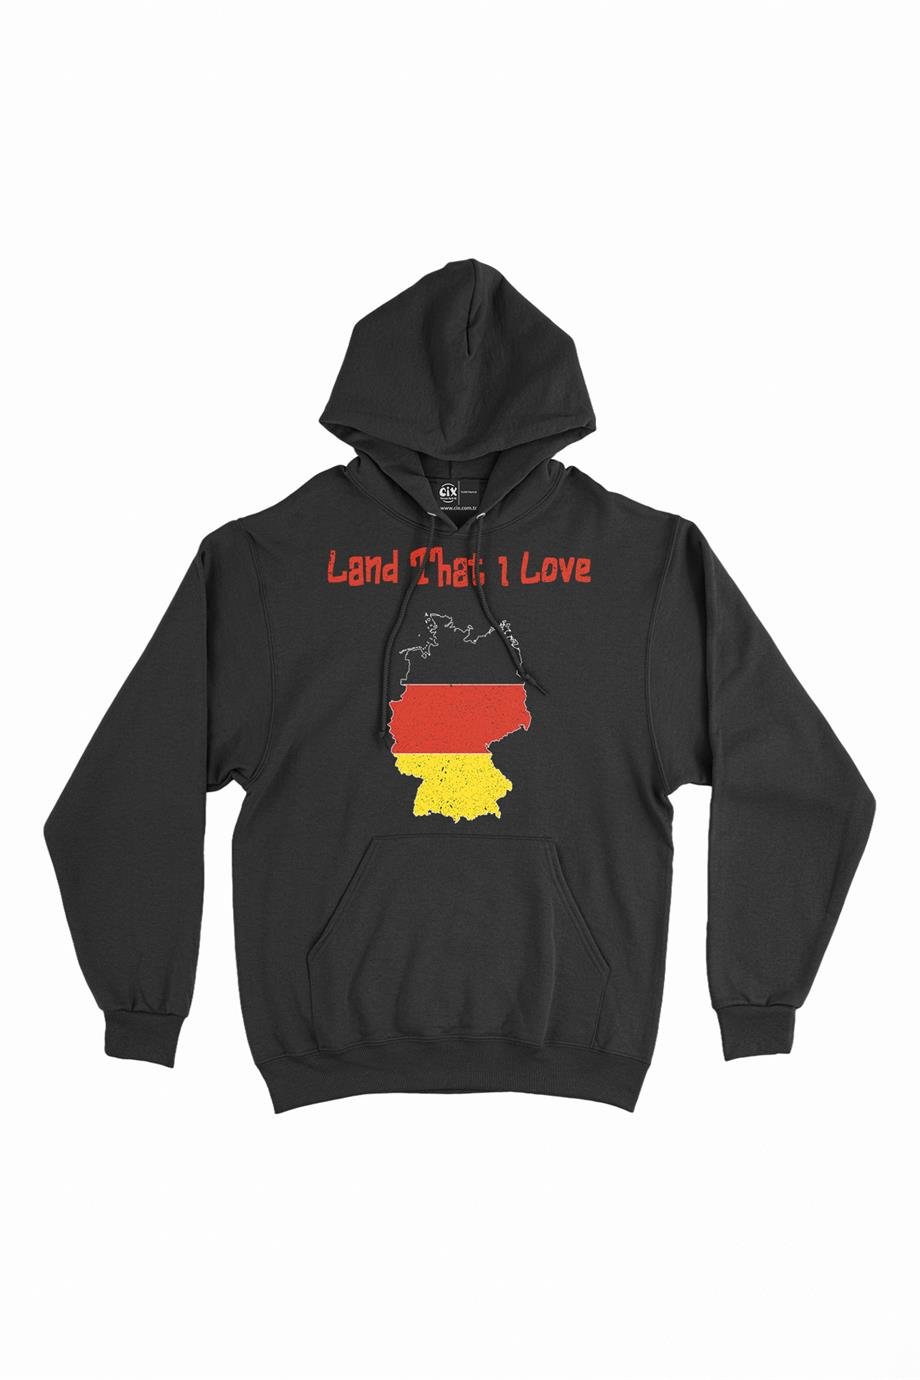 Land That I Love Belçika Kapşonlu Sweatshirt Hoodie - Ücretsiz Kargo